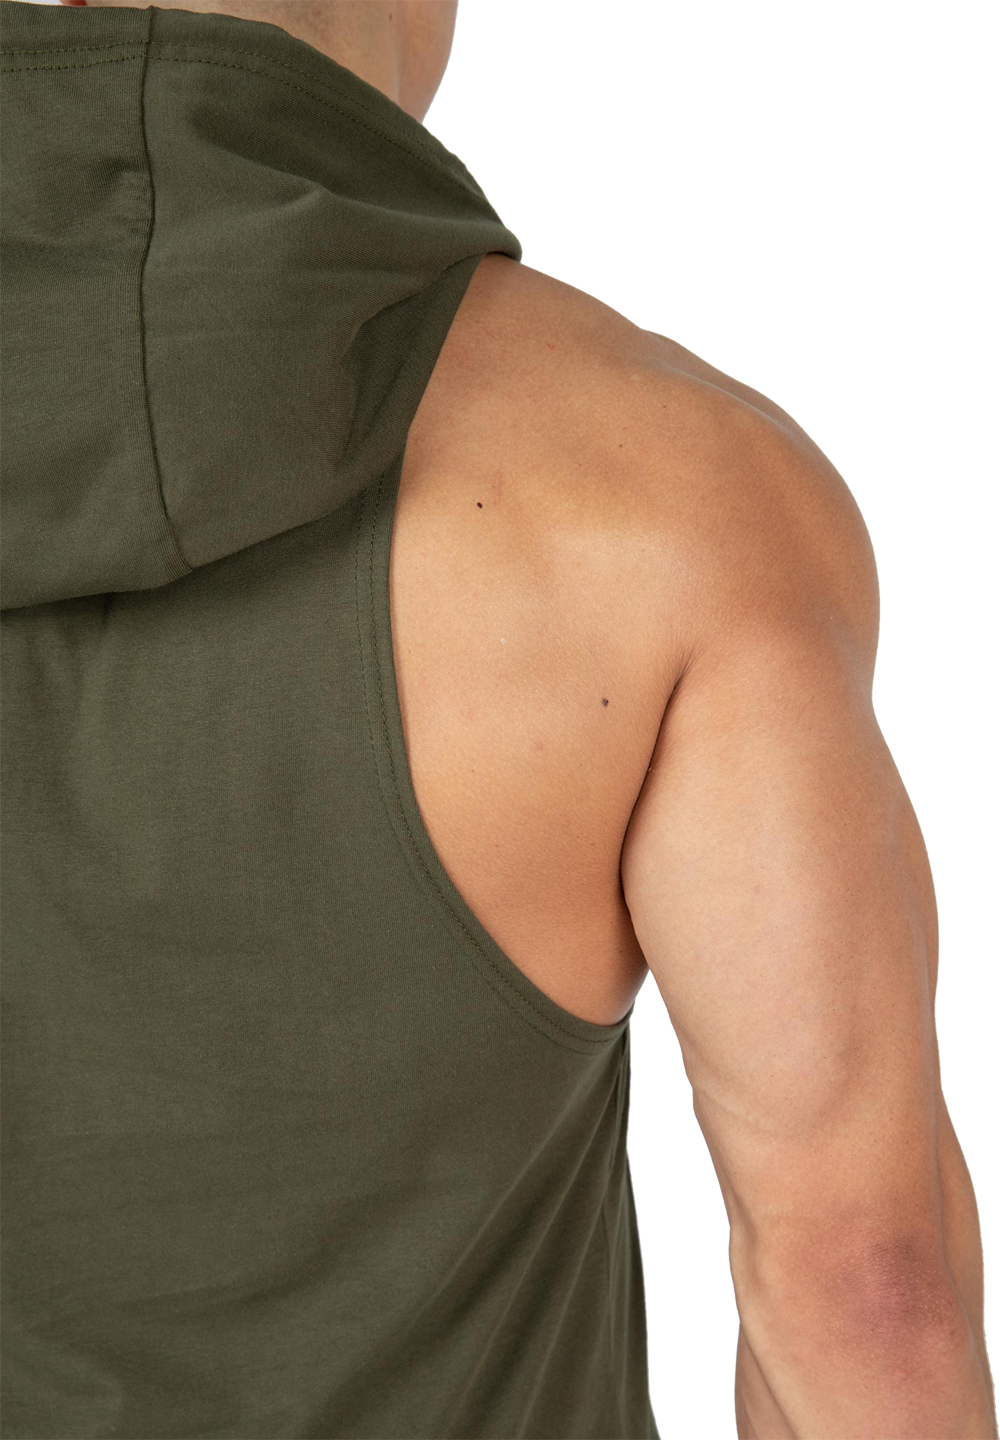 Худи Rogers Hooded Tank Top – Army Green от Gorilla Wear